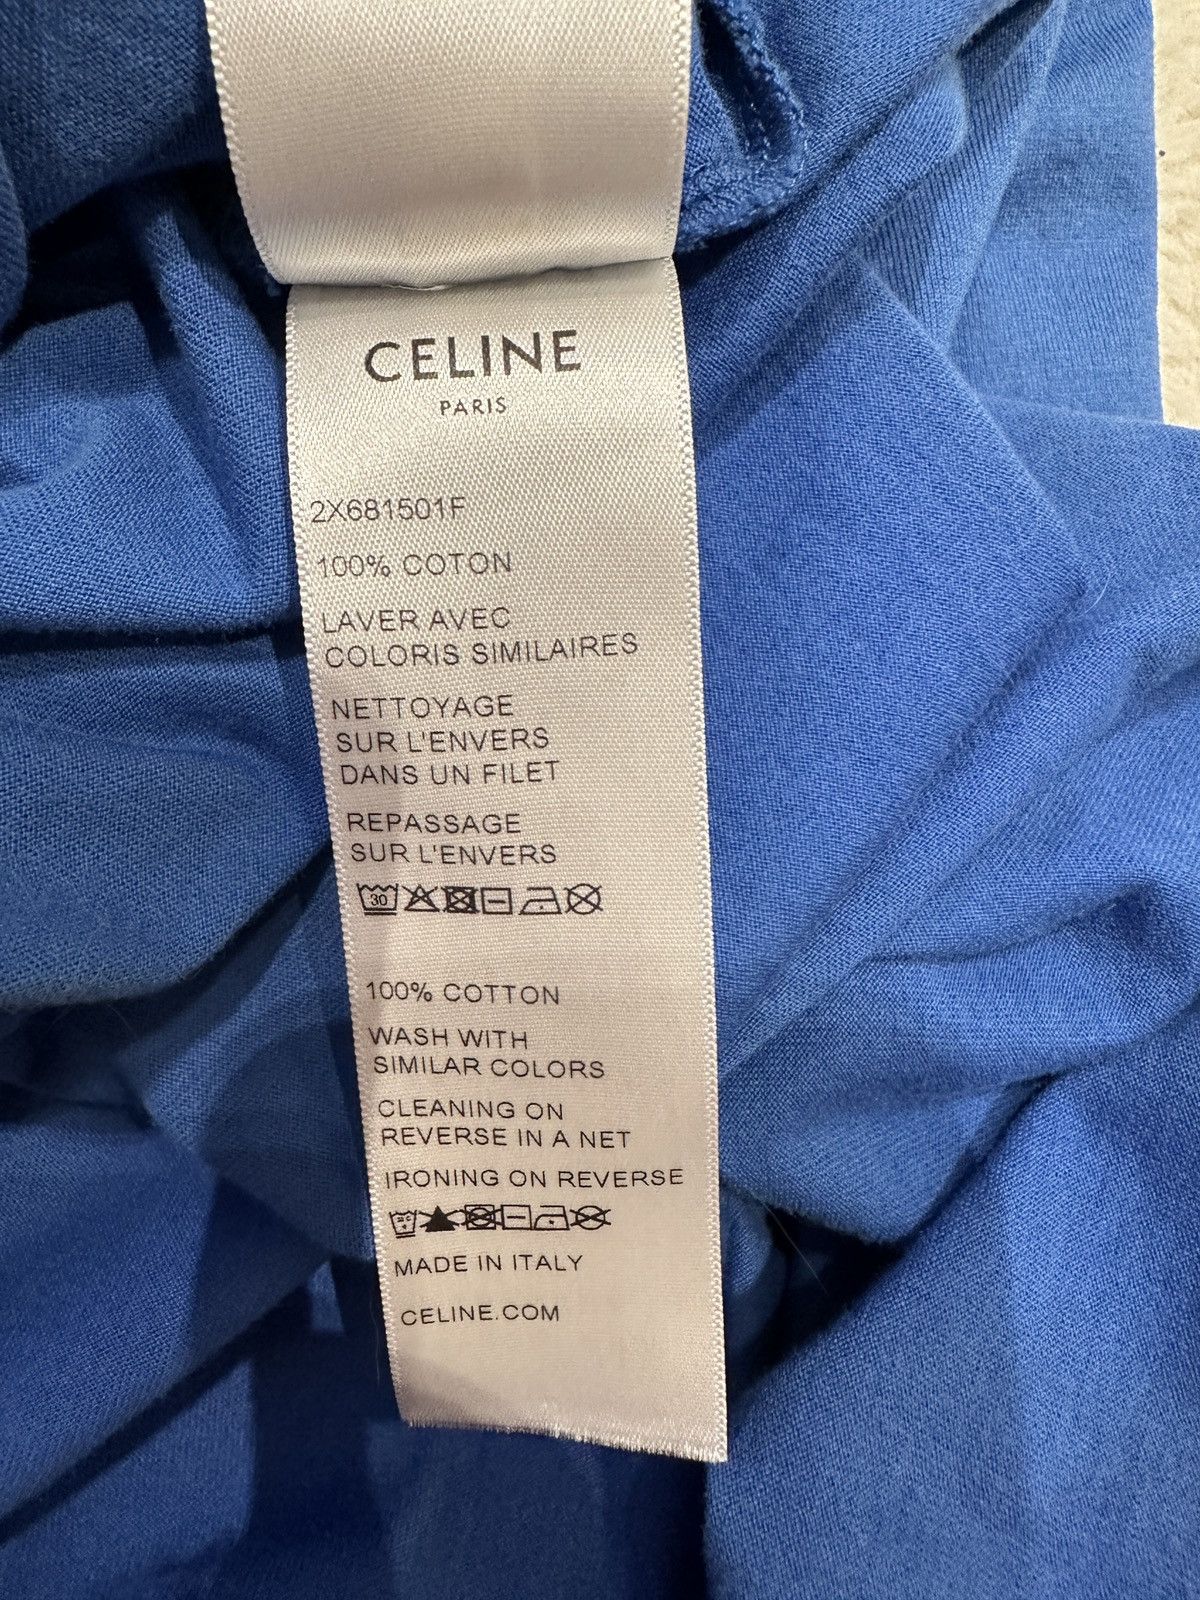 Celine Celine by Hedi Slimane Blue logo t shirt tee size M Size US M / EU 48-50 / 2 - 9 Preview